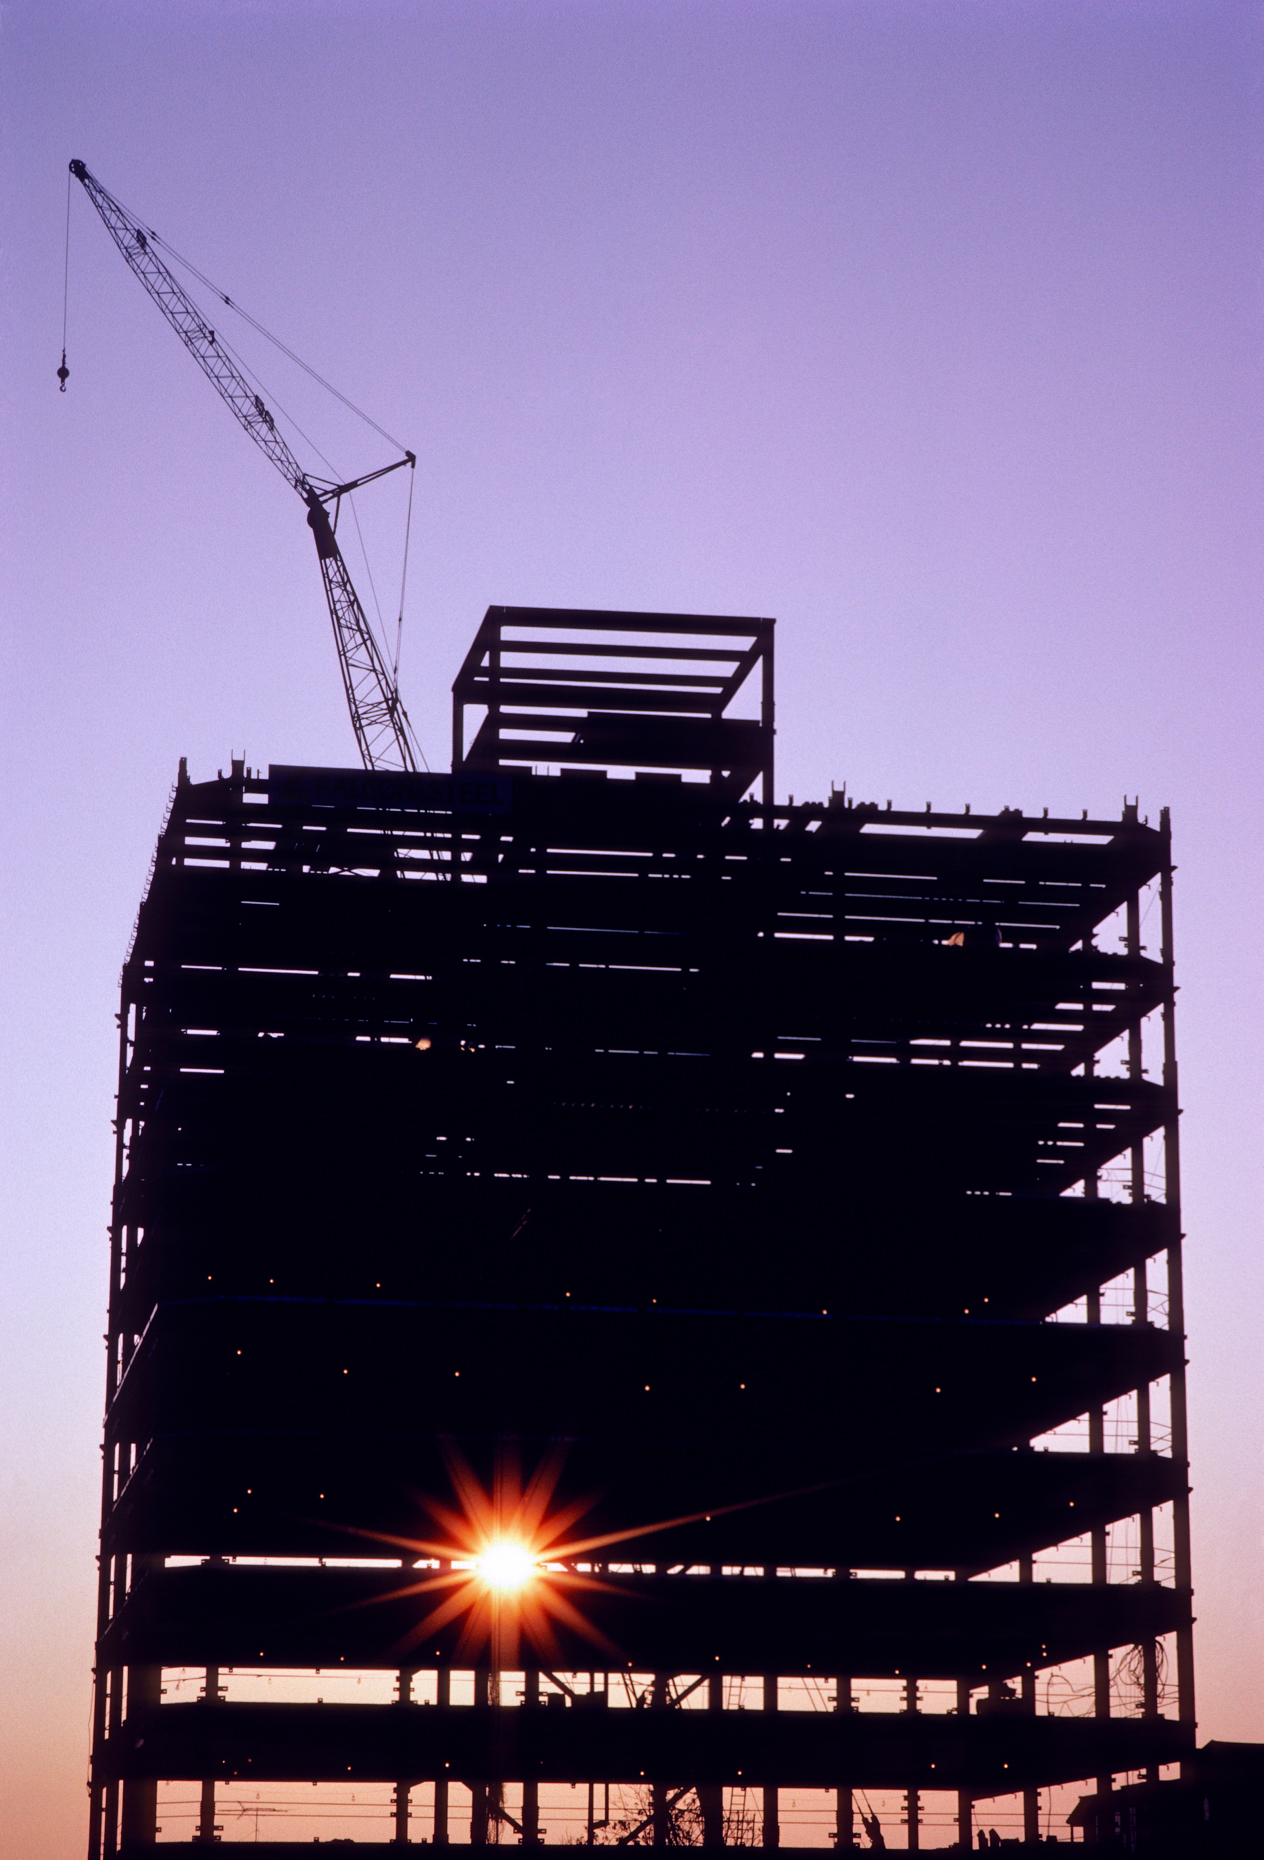 Sunrise through the steel framework and crane for a skyscraper